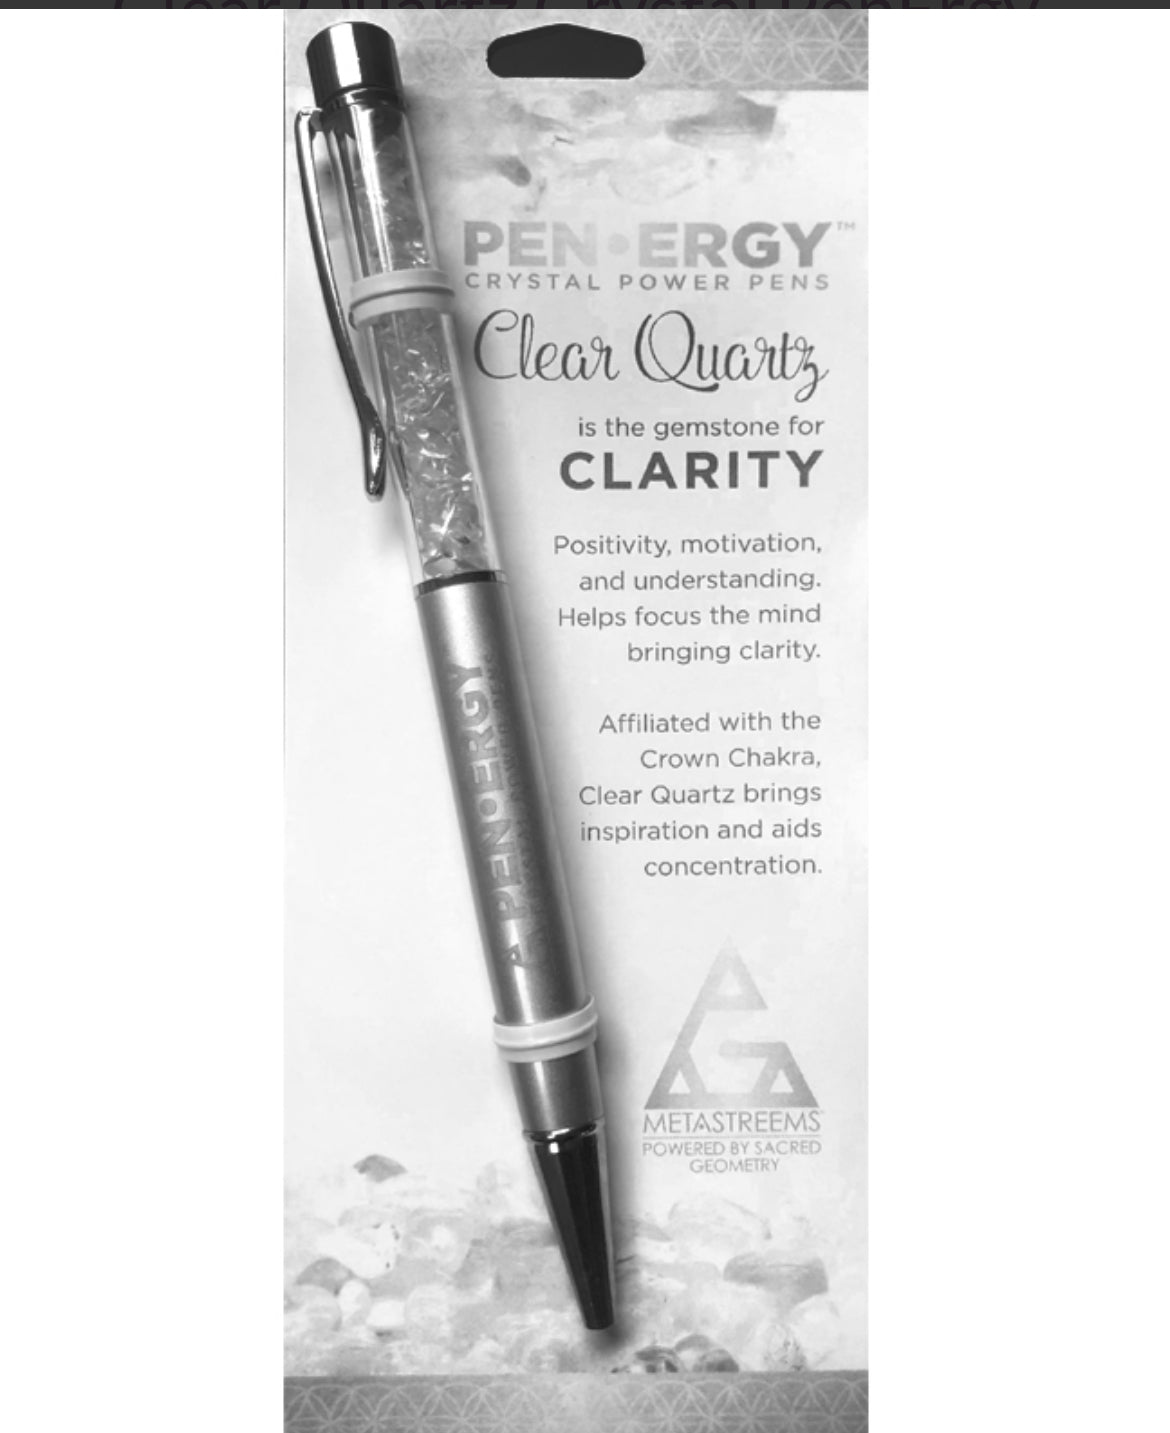 Pen•Ergy crystal power pens